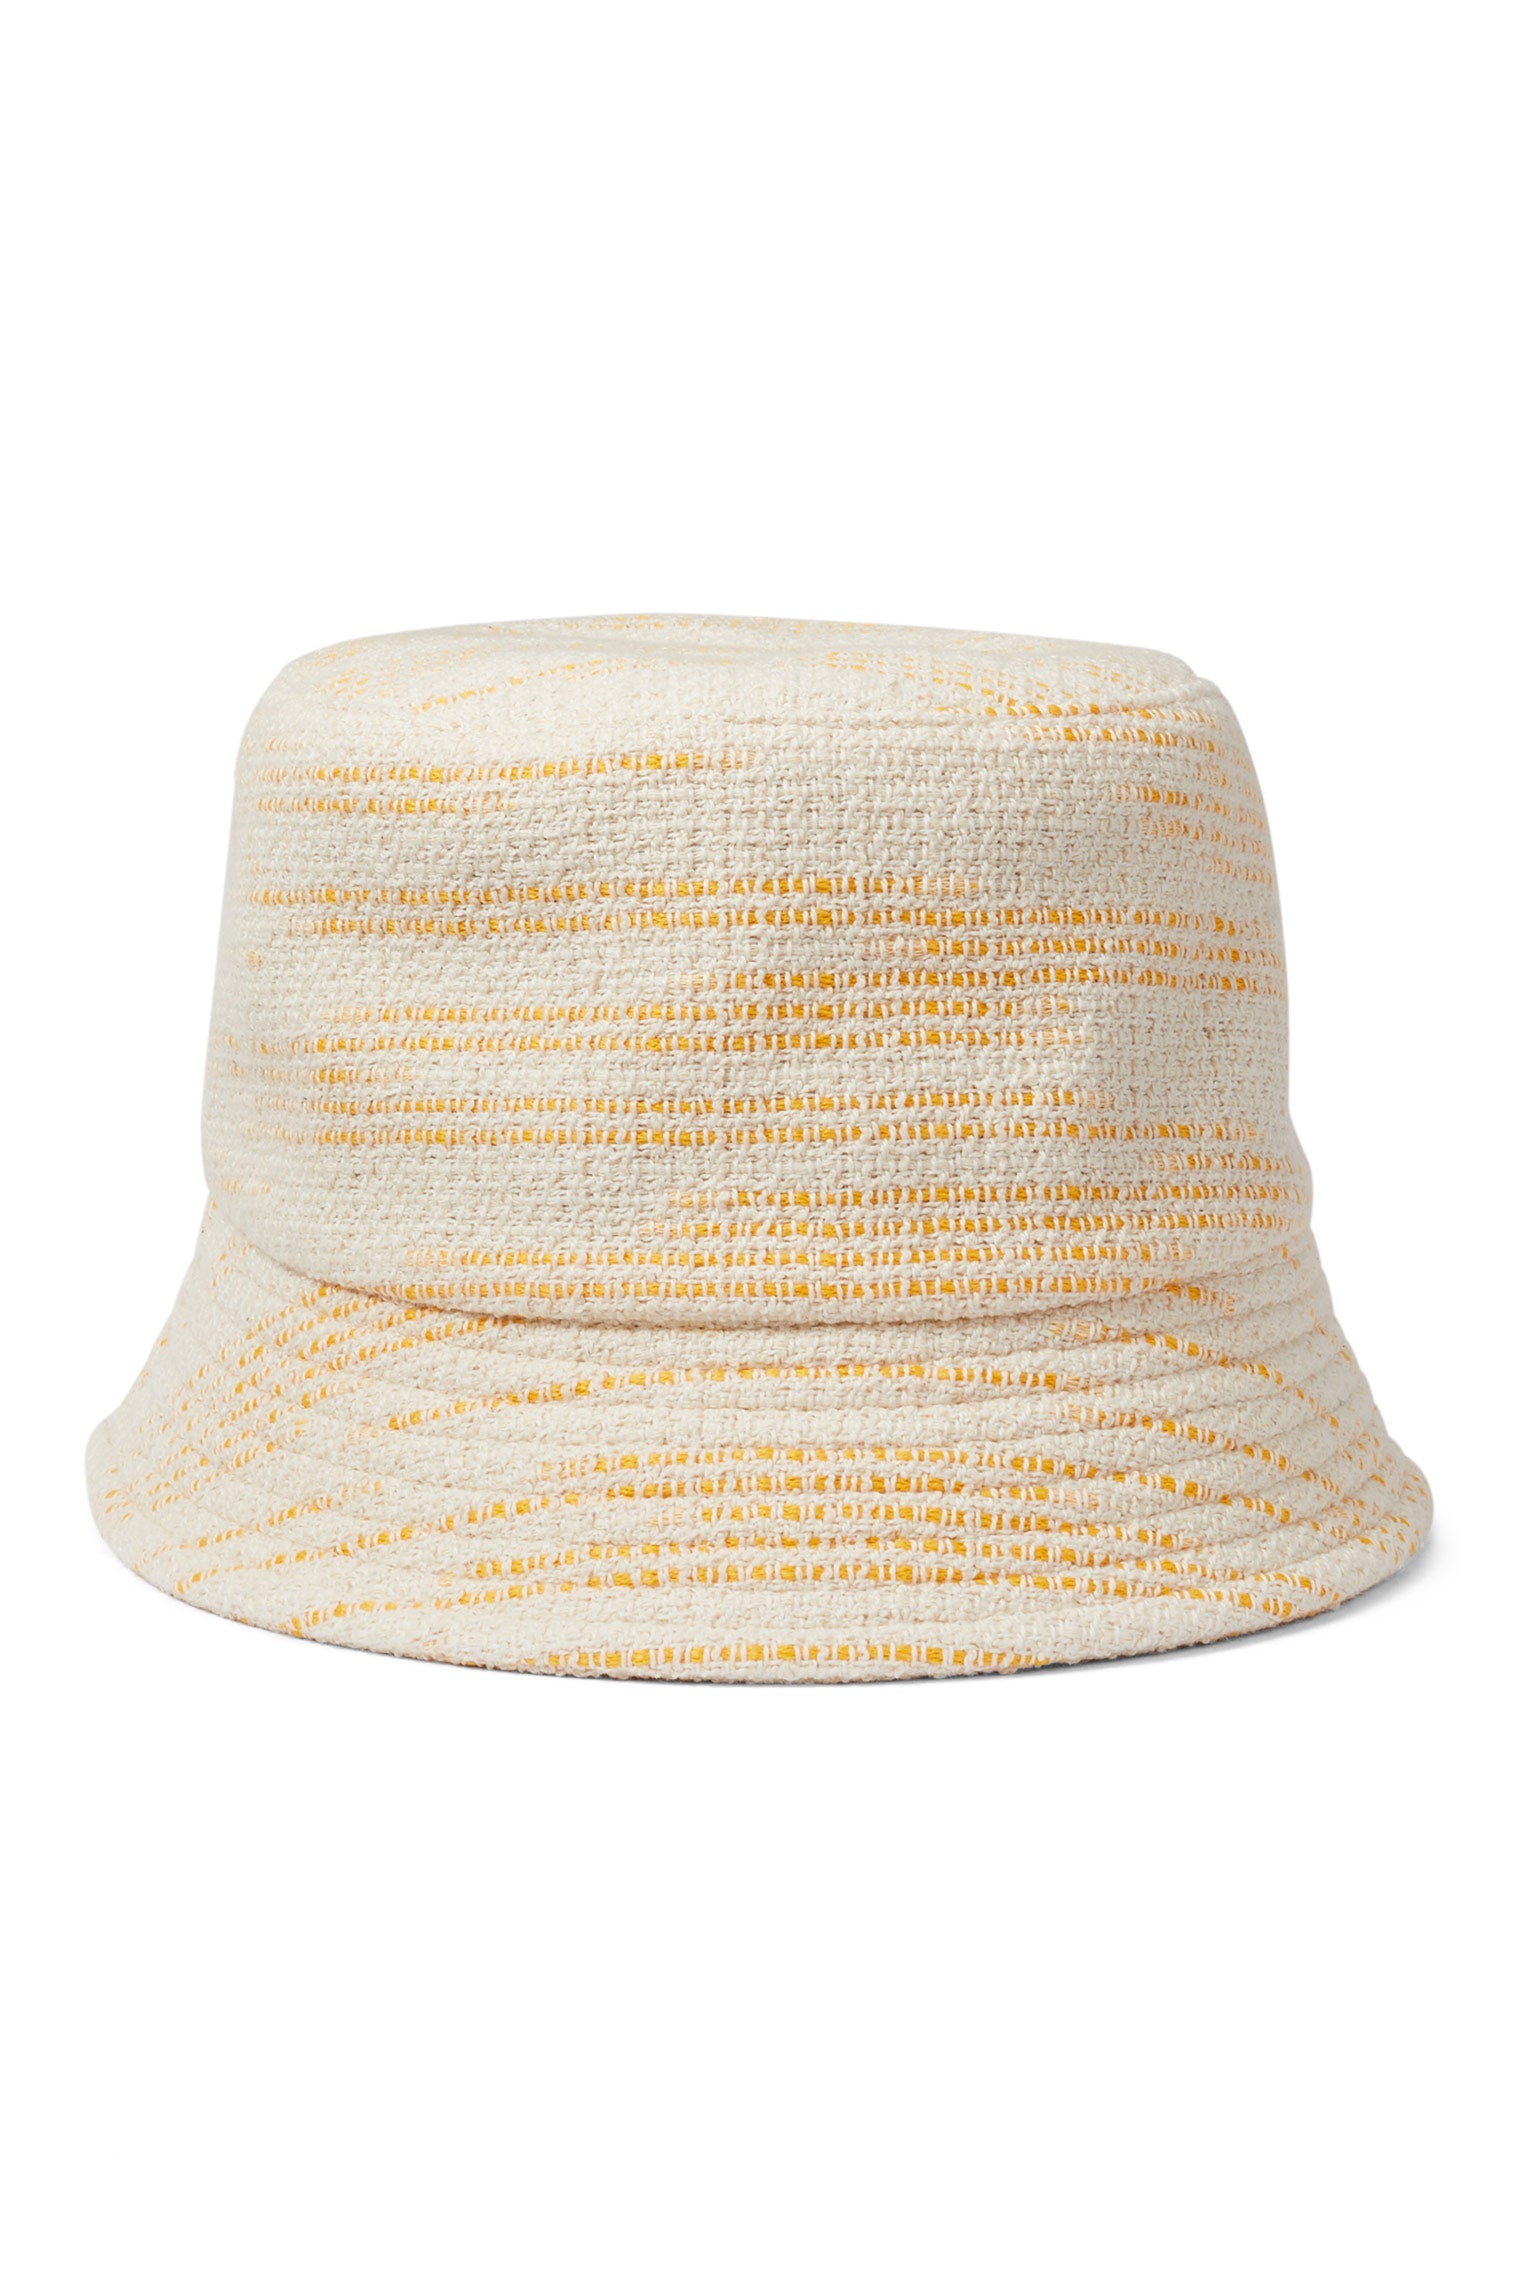 Rye Yellow Bucket Hat - Packable Hats for Travel - Lock & Co. Hatters London UK